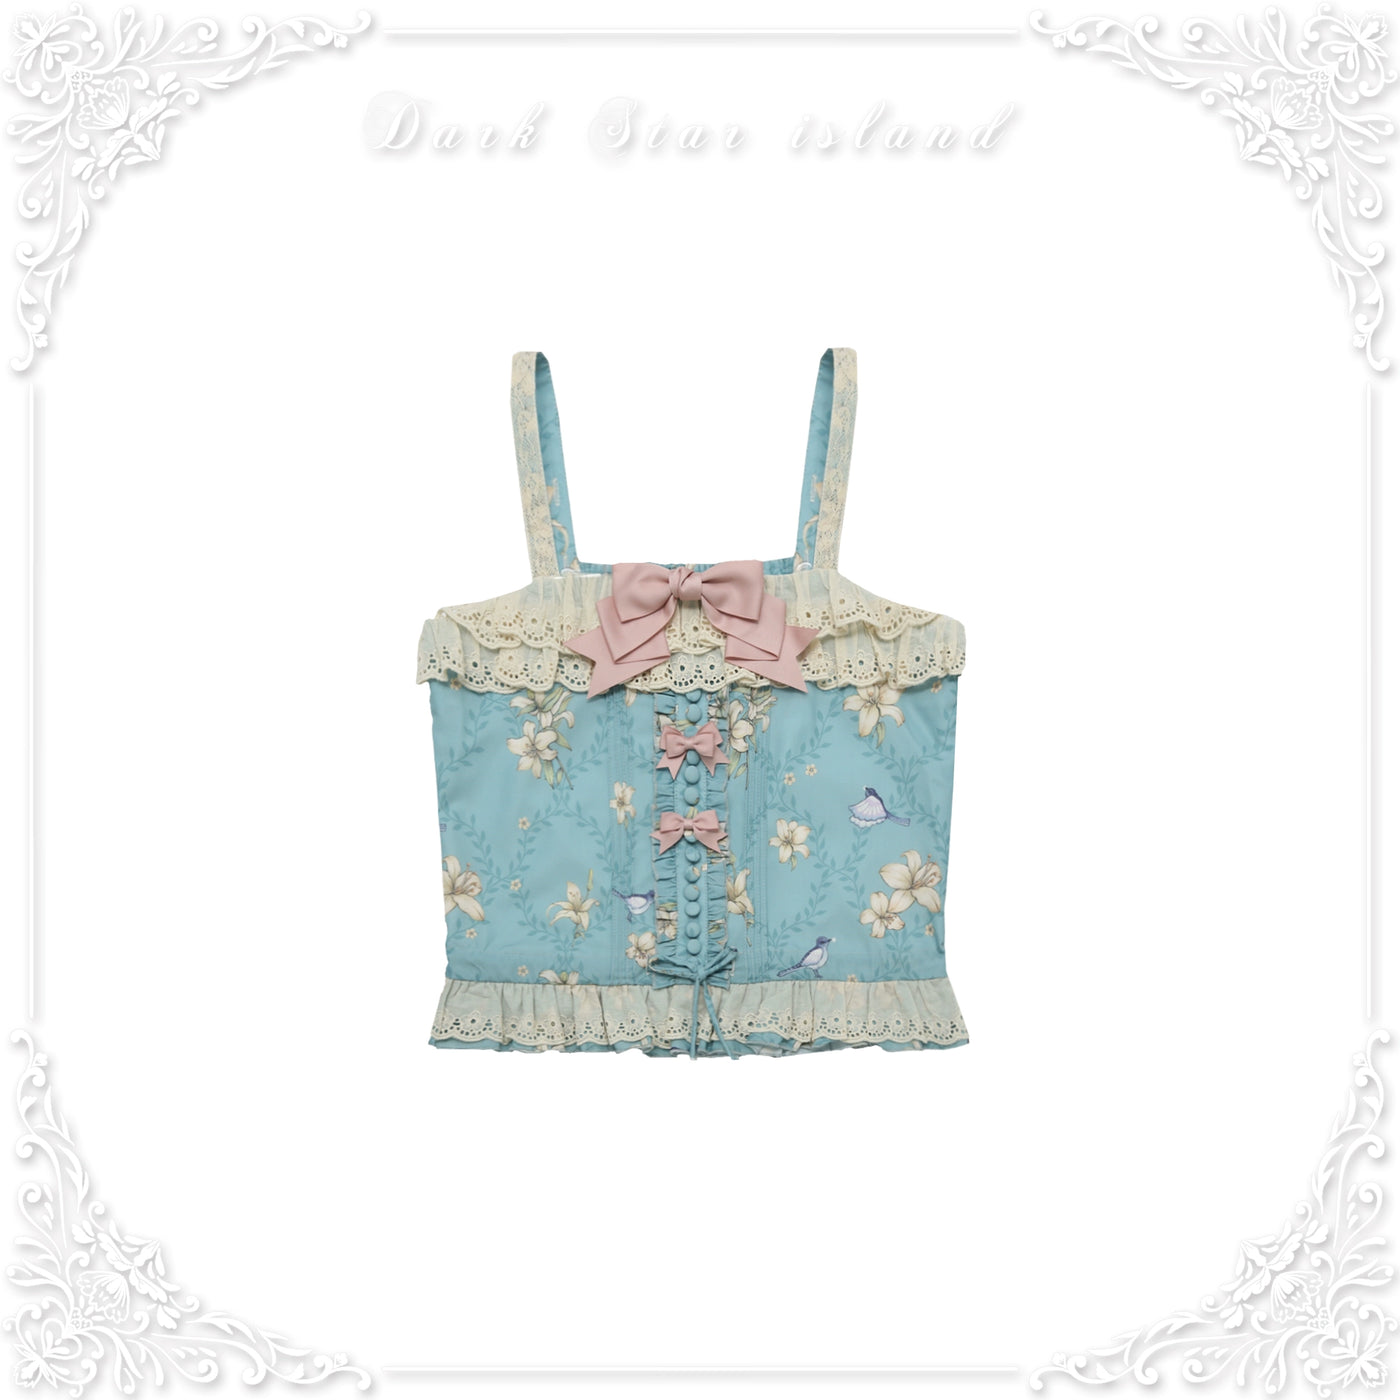 Dark Star Island~Lily&Mountain Breeze~Lily Print Lolita Camisole Skirt Set S Blue top 